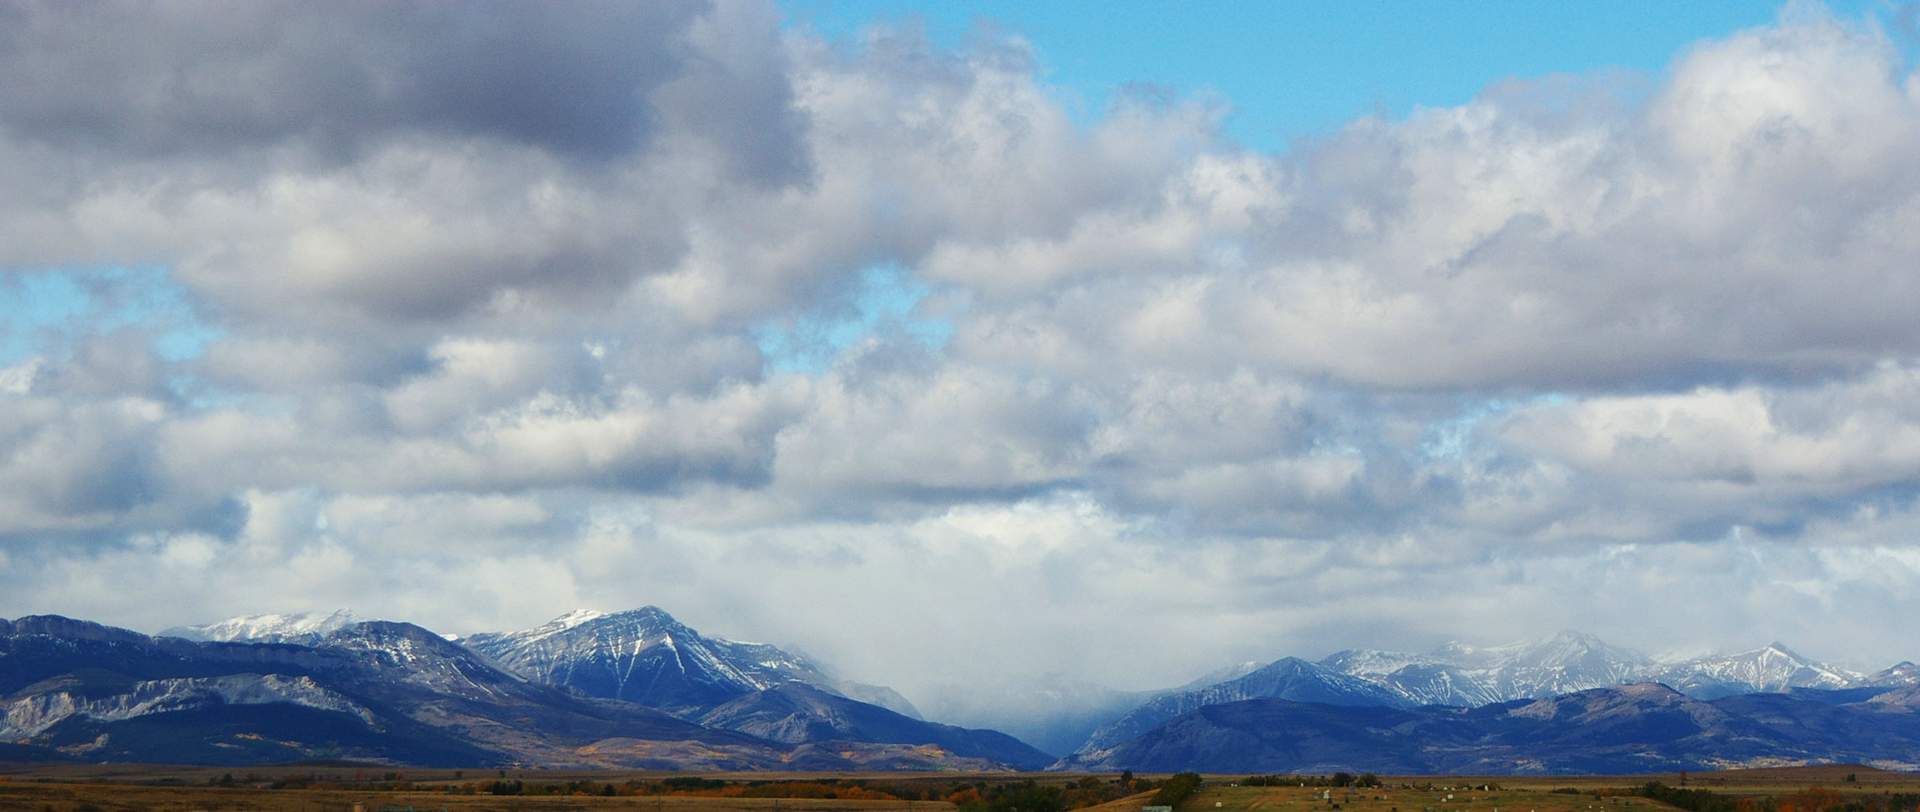 Cloudy sky over Montana mountains